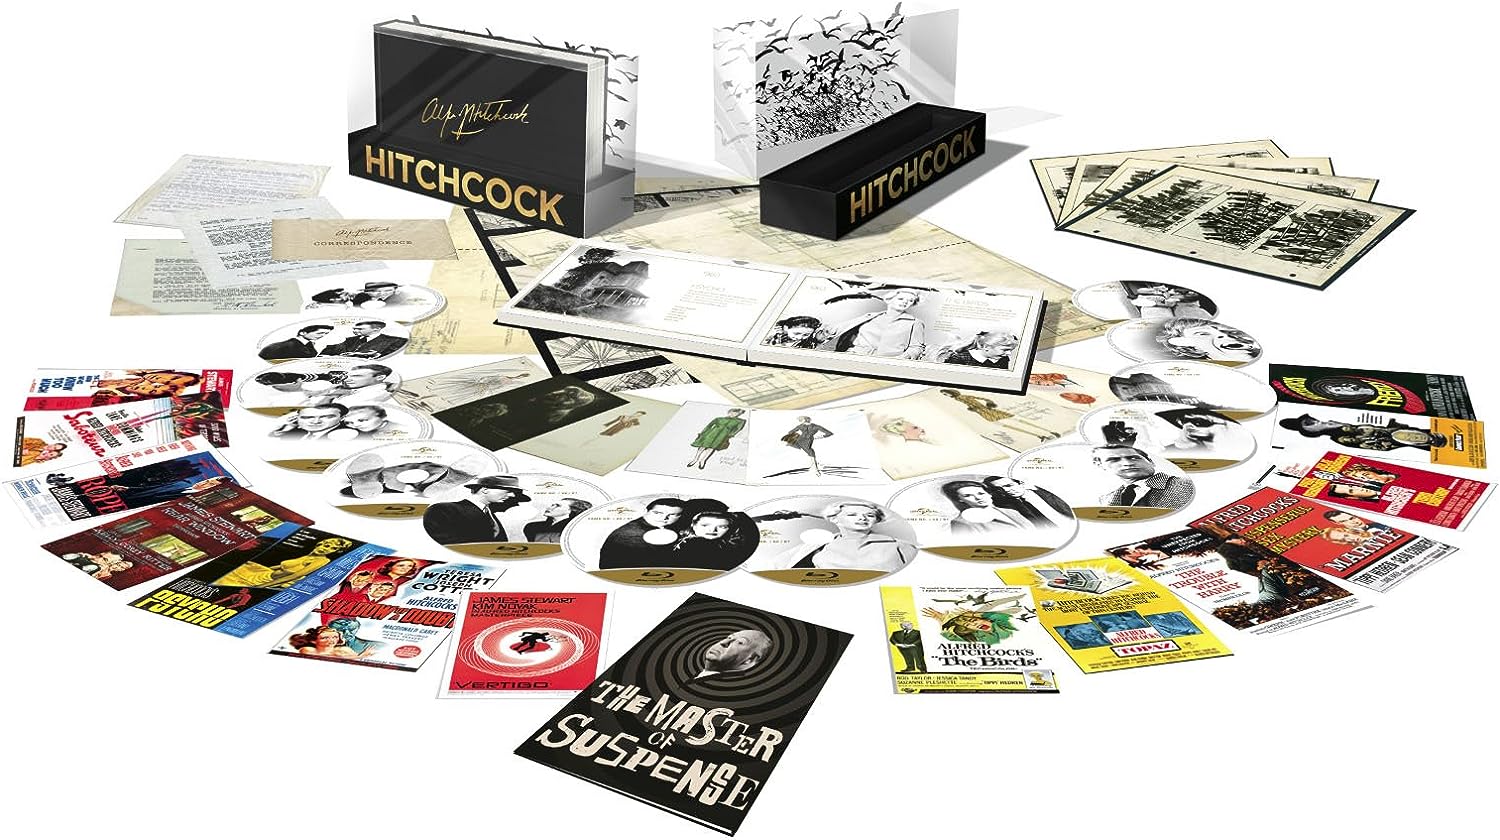 Альфред Хичкок: Коллекция шедевров (14 Blu-ray) Limited Edition